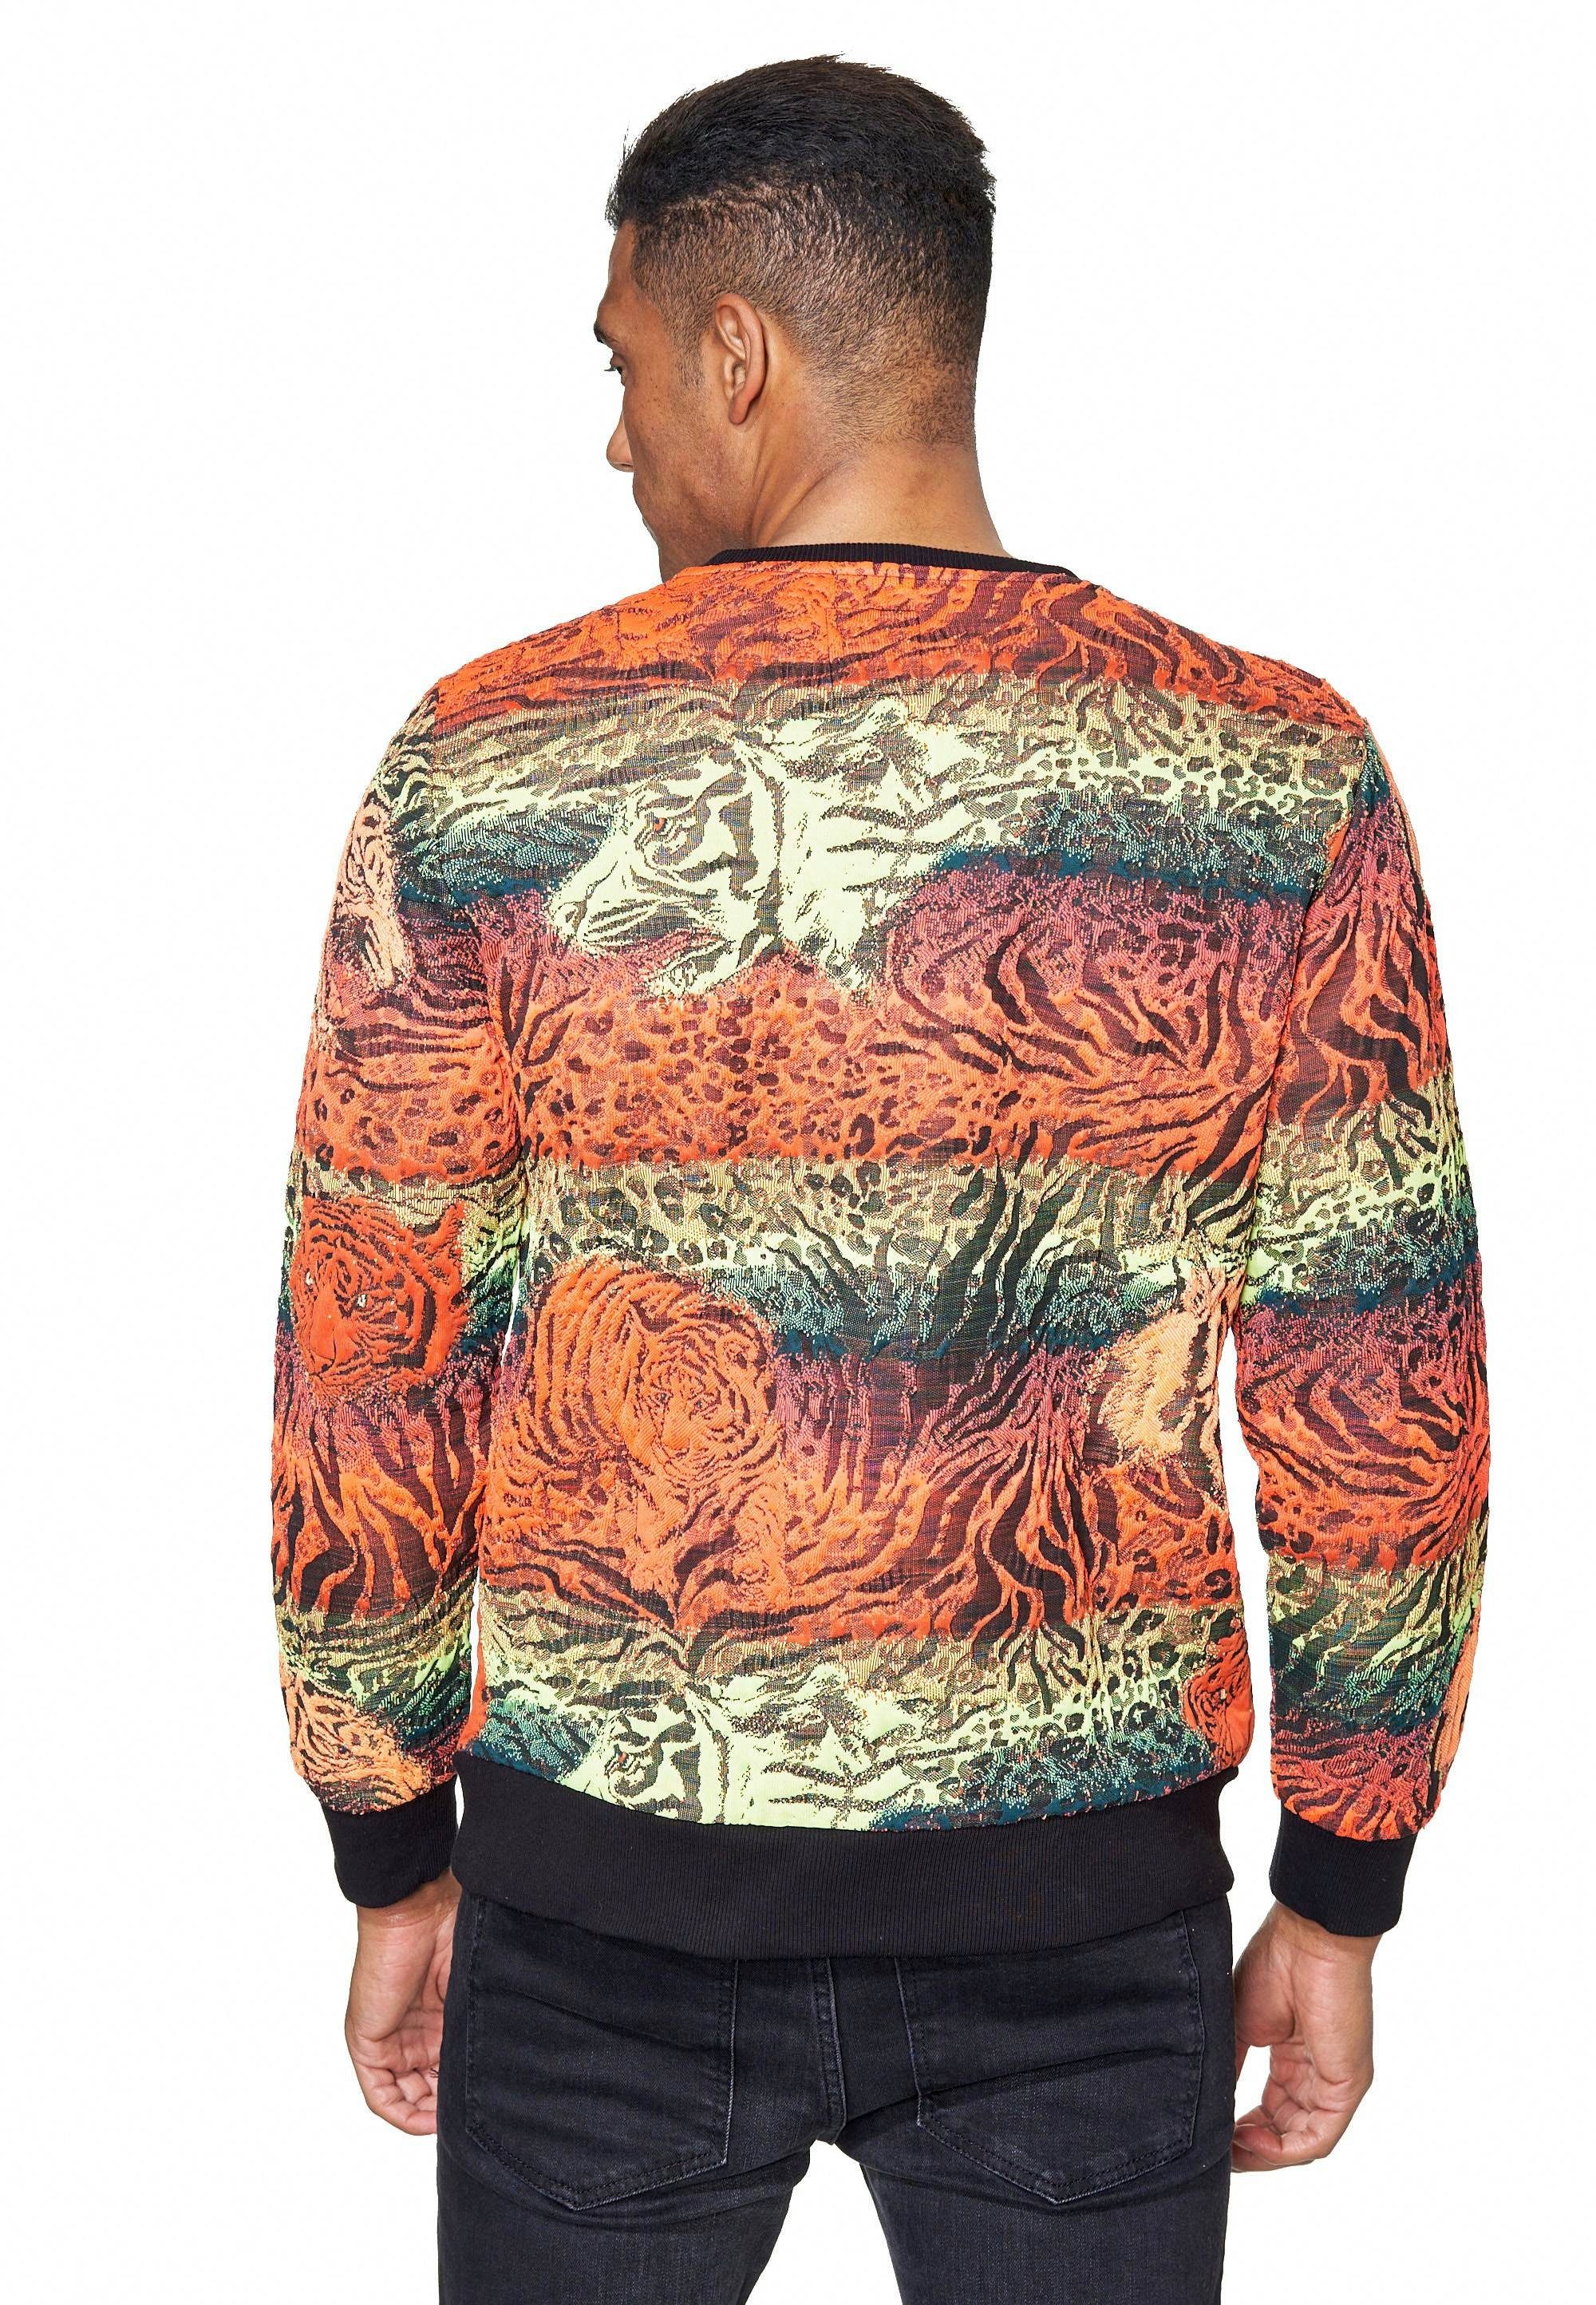 Rusty Neal Rusty im trendigen Neal Sweater Tiger-Design Sweatshirt